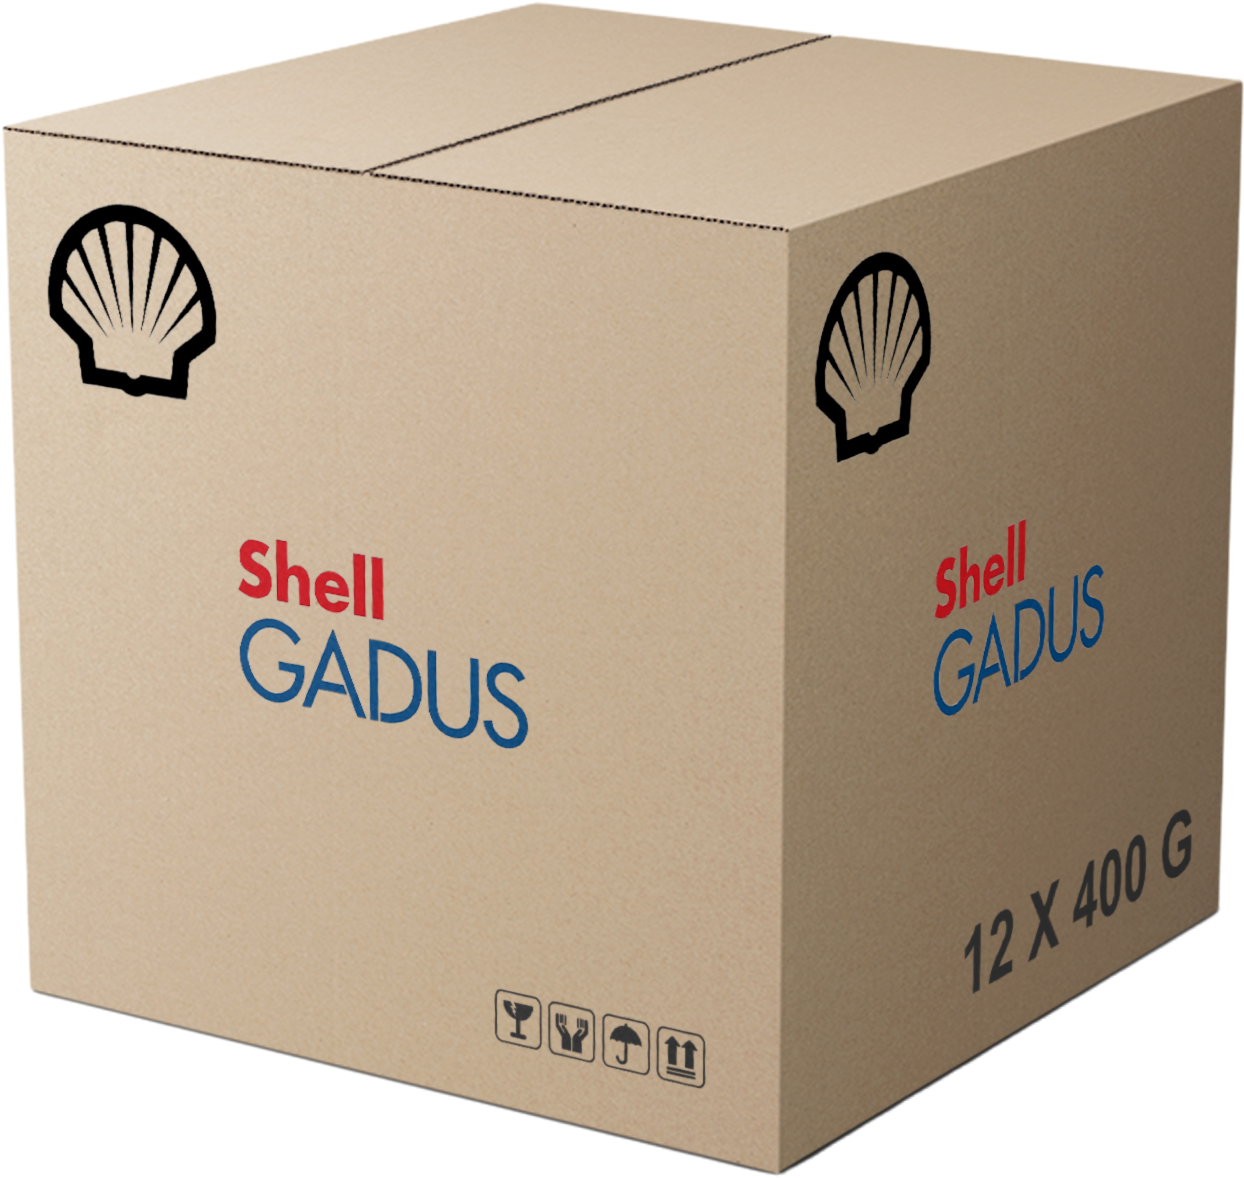 Shell Gadus S2 V220AC 2, 12 x 400 gr